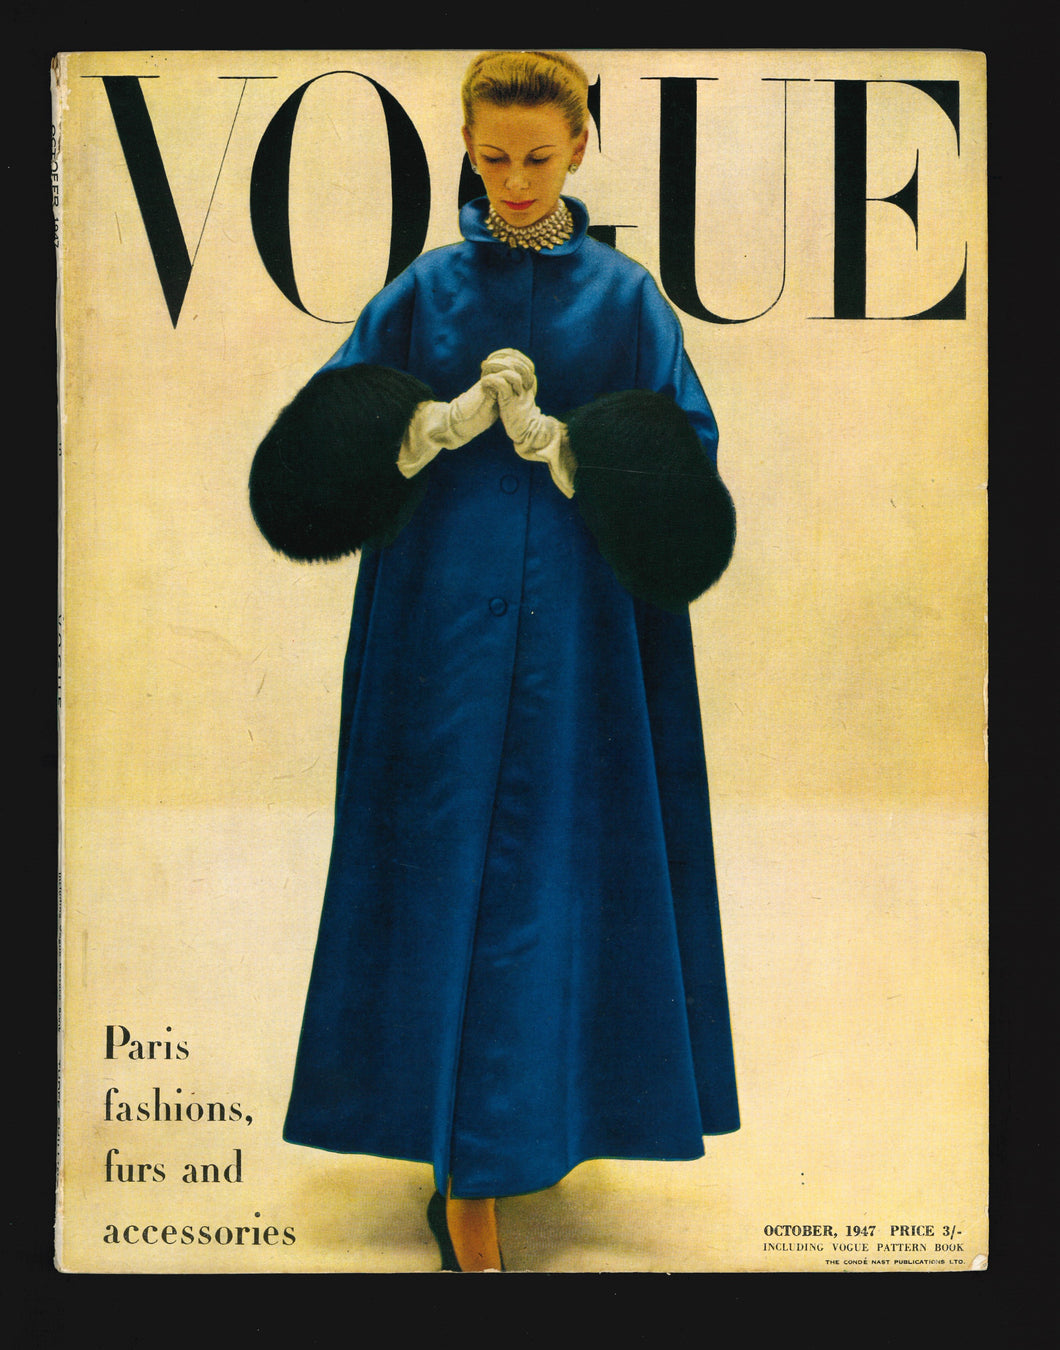 Vogue UK Oct 1947